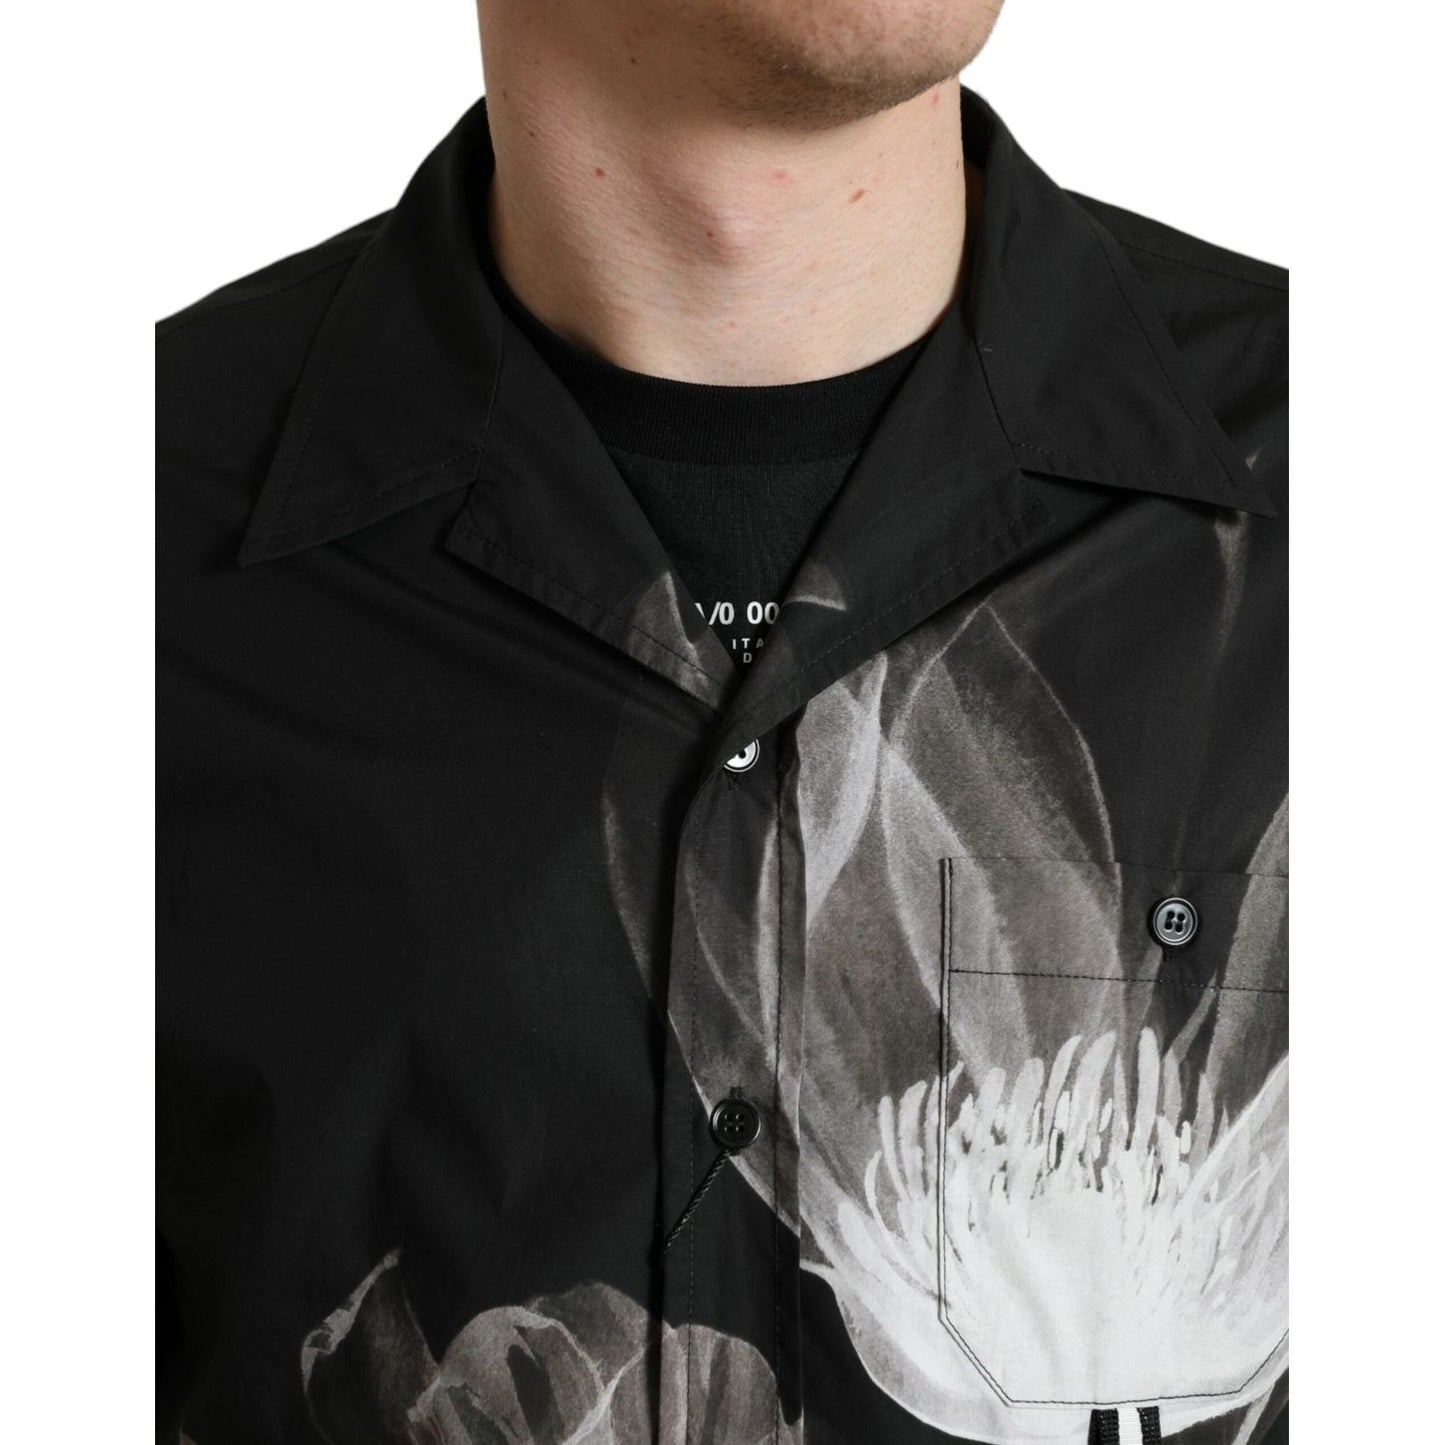 Dolce & Gabbana Floral Elegance Button Down Shirt black-floral-cotton-collared-long-sleeves-men-shirt